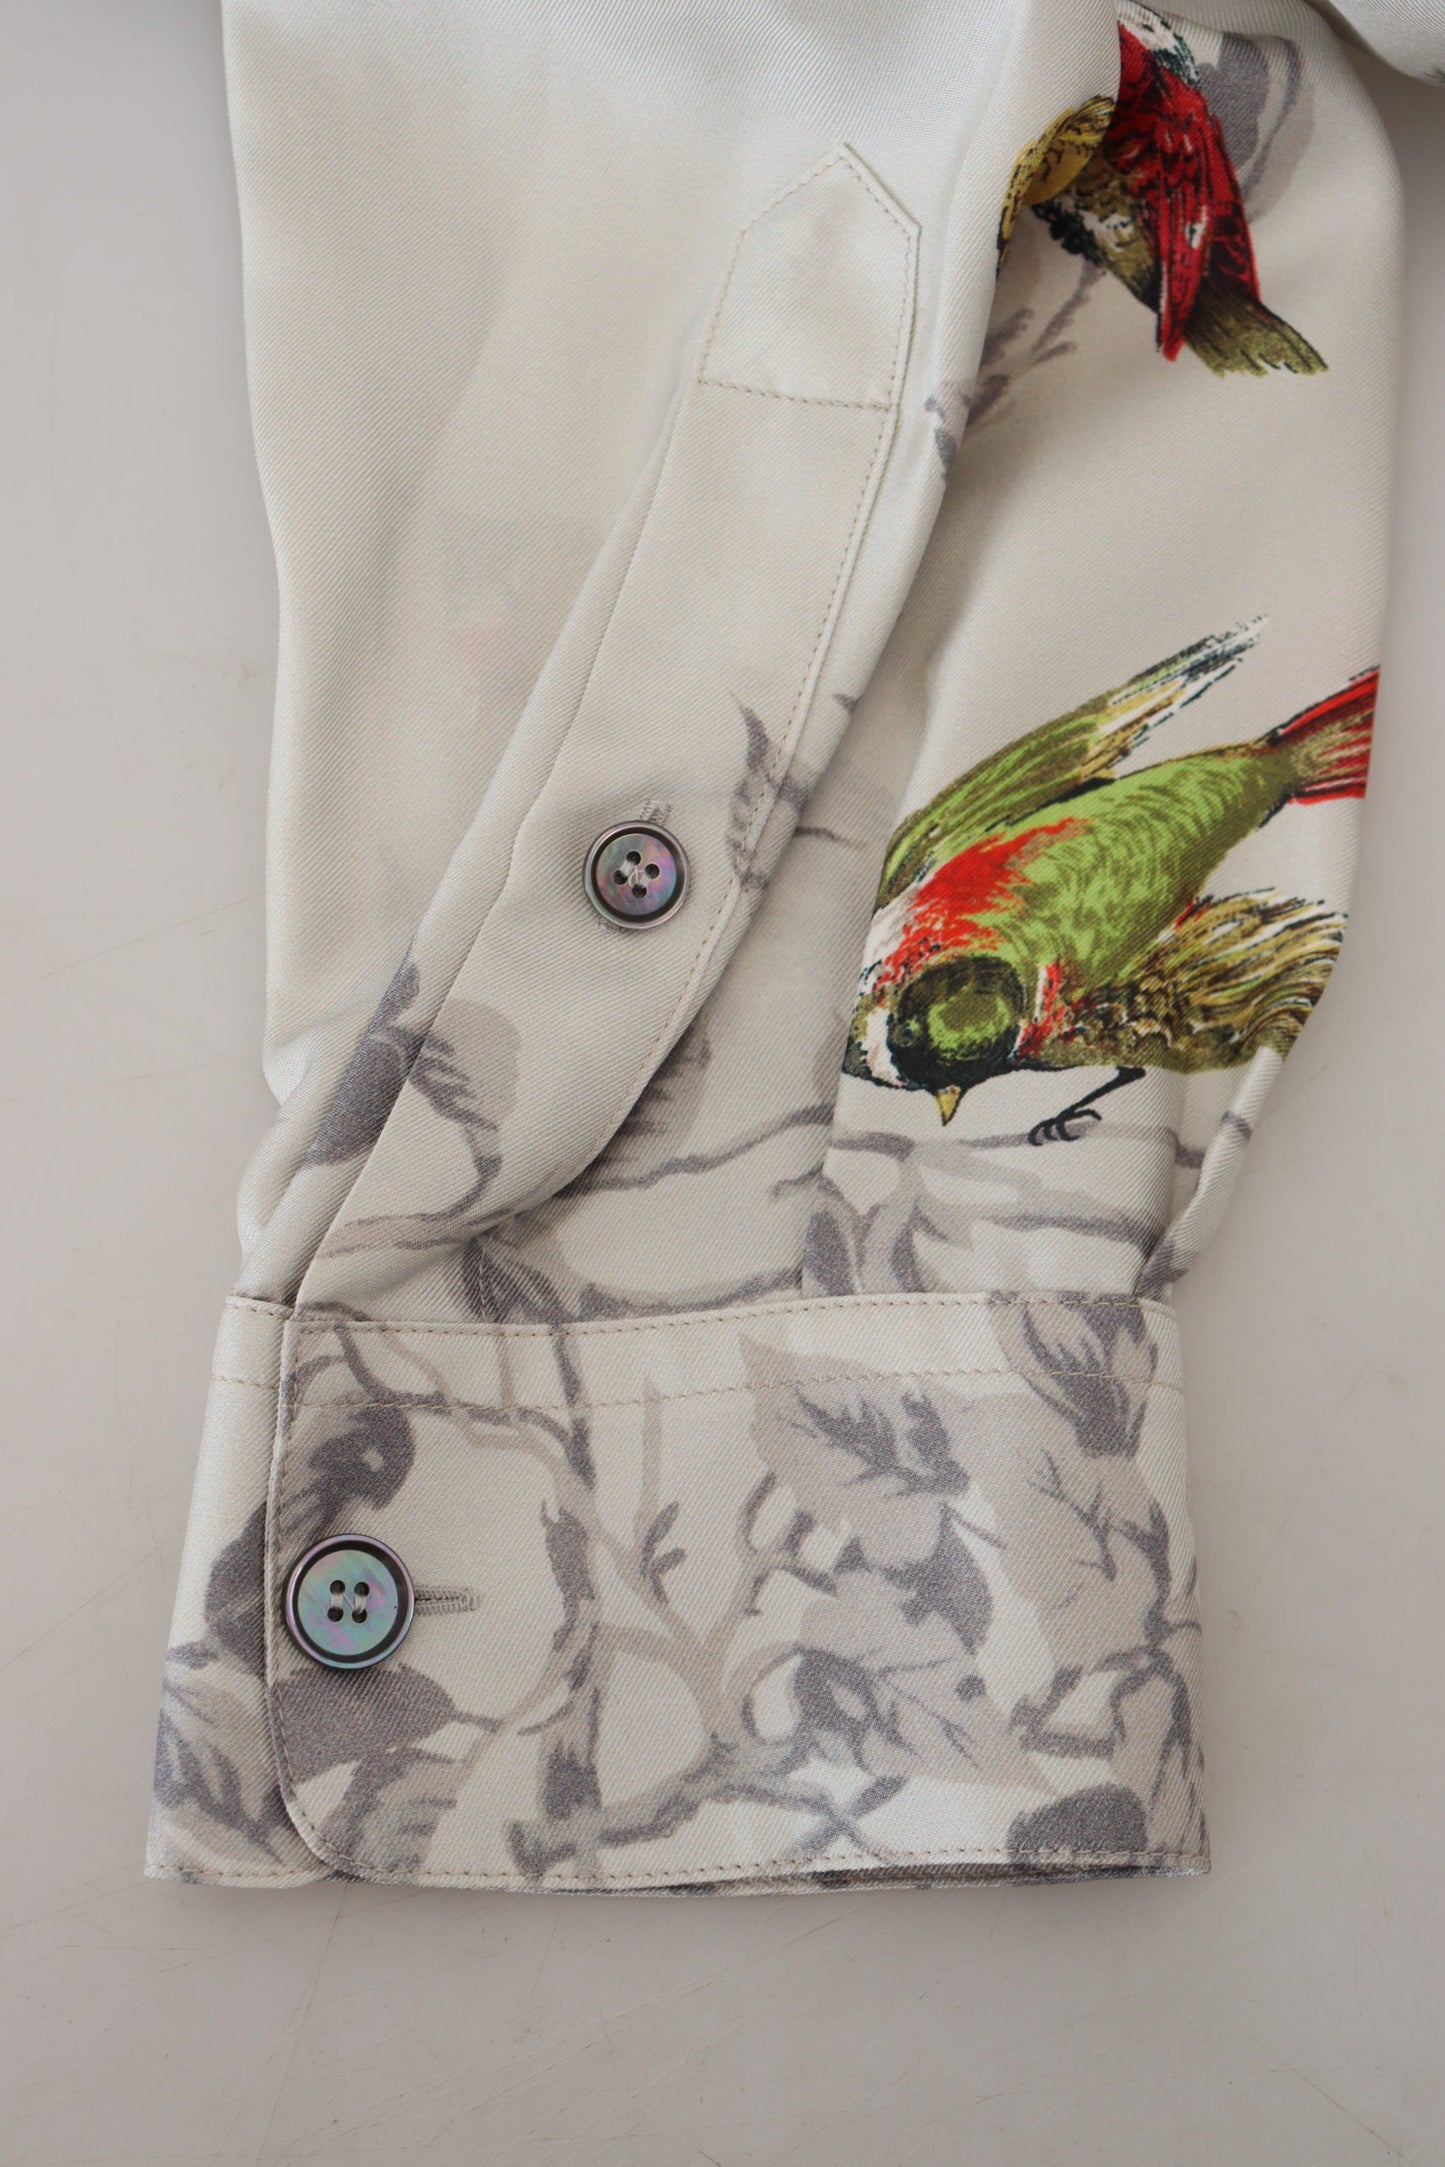 Elegant Silk Bird Print Casual Shirt